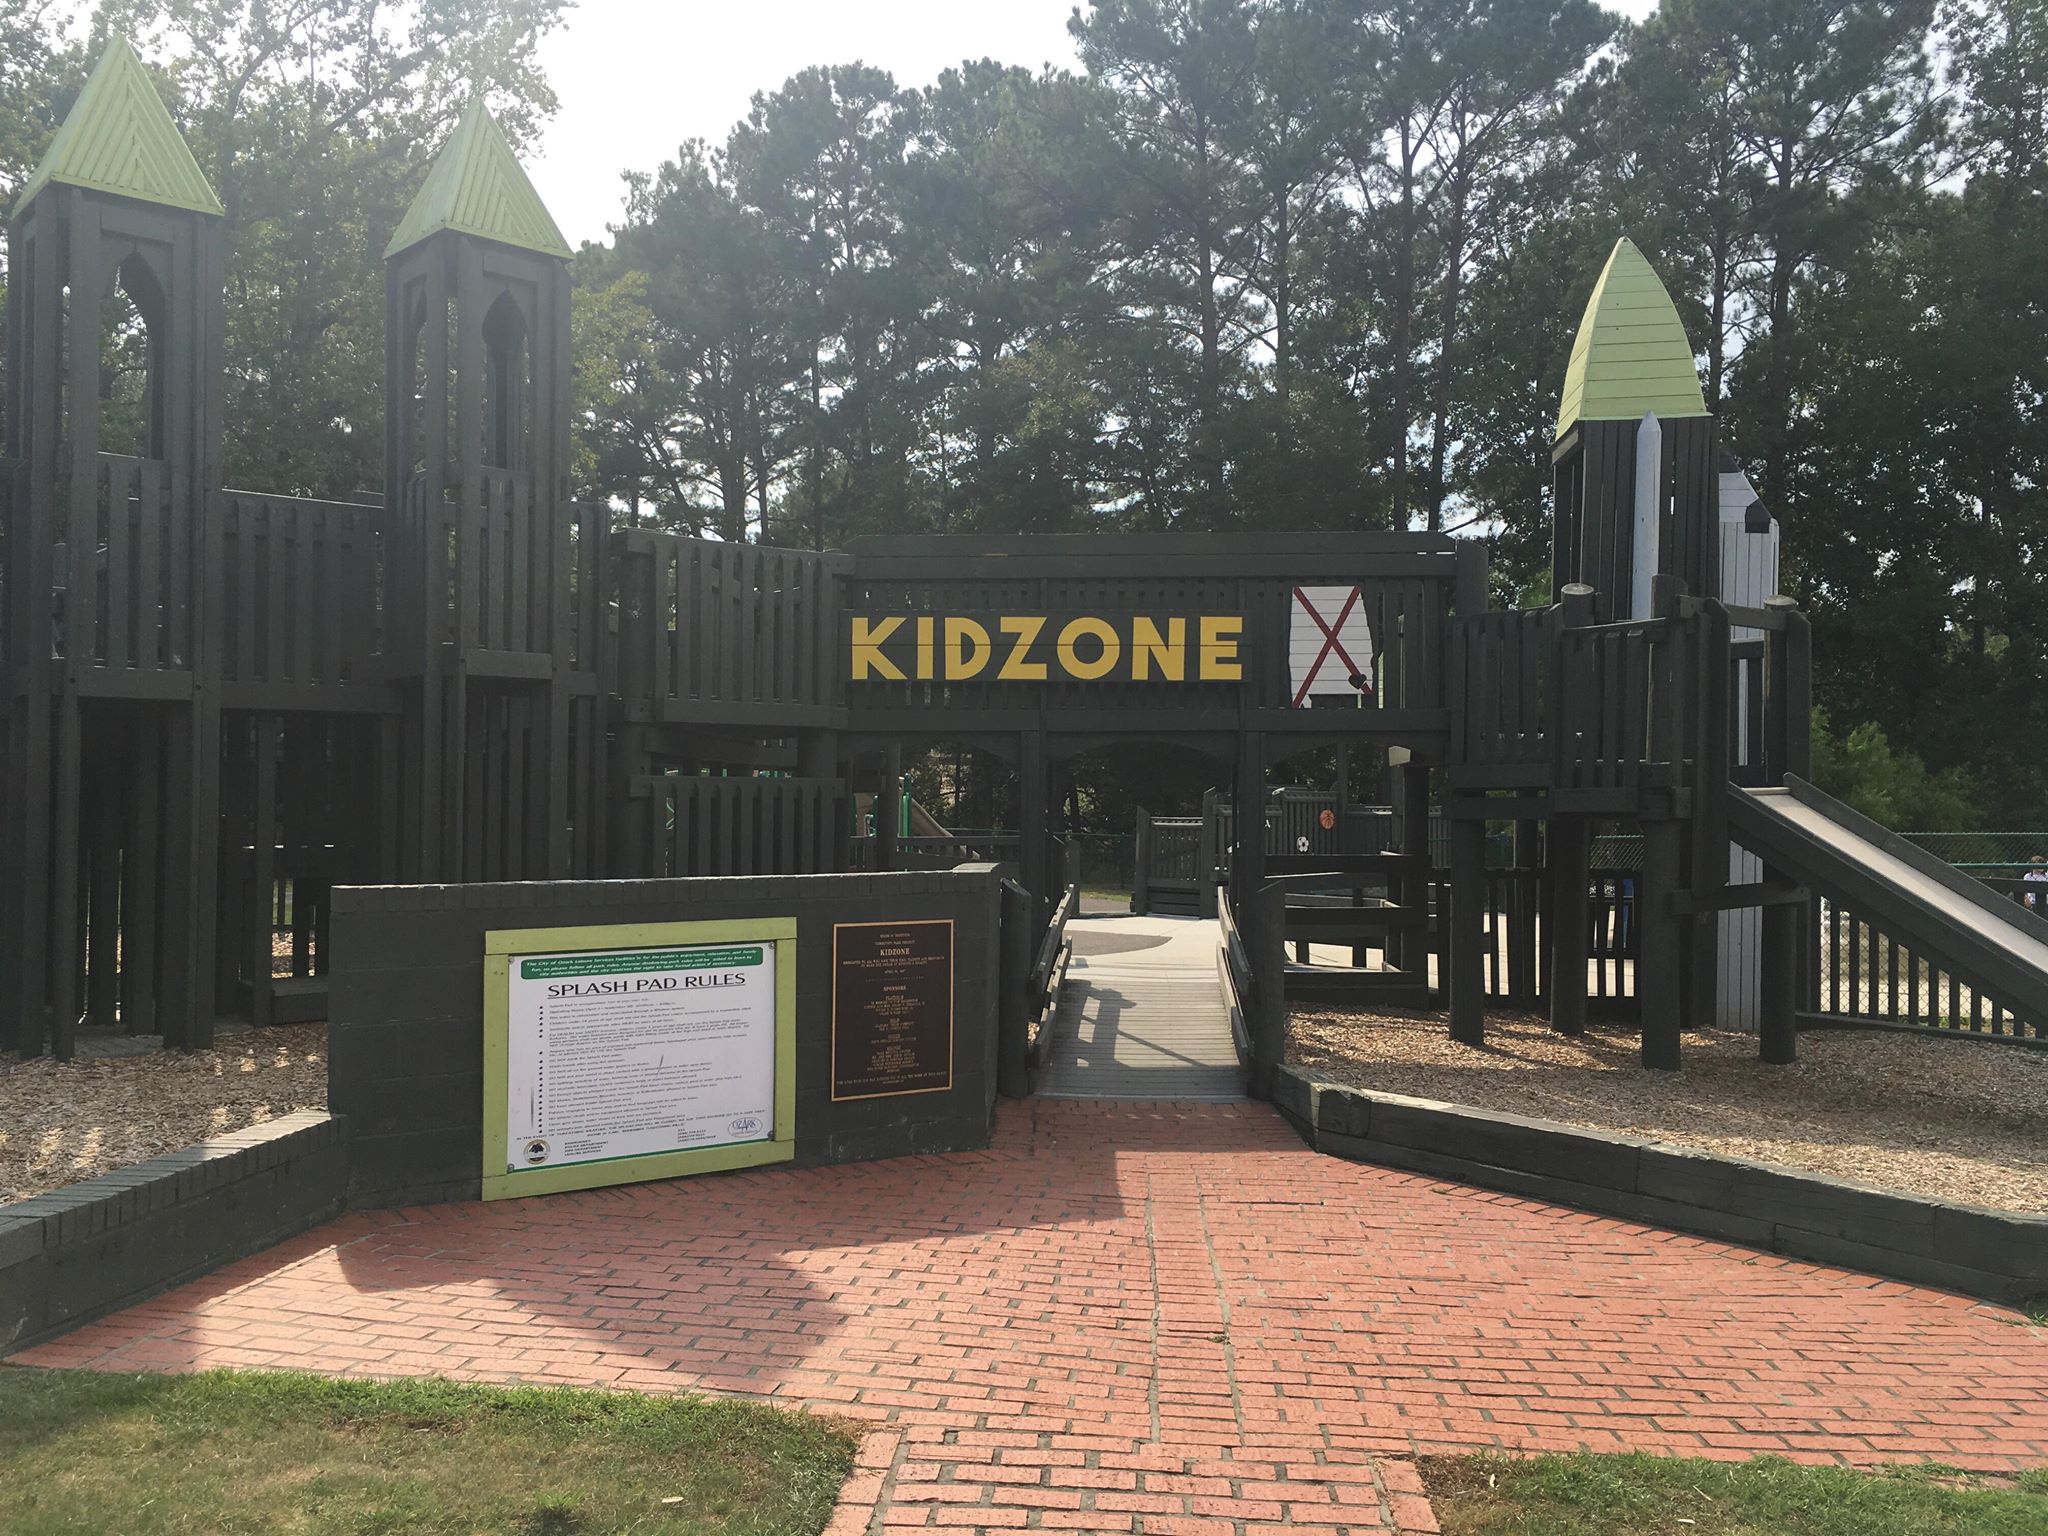 Kidzone Pavilion